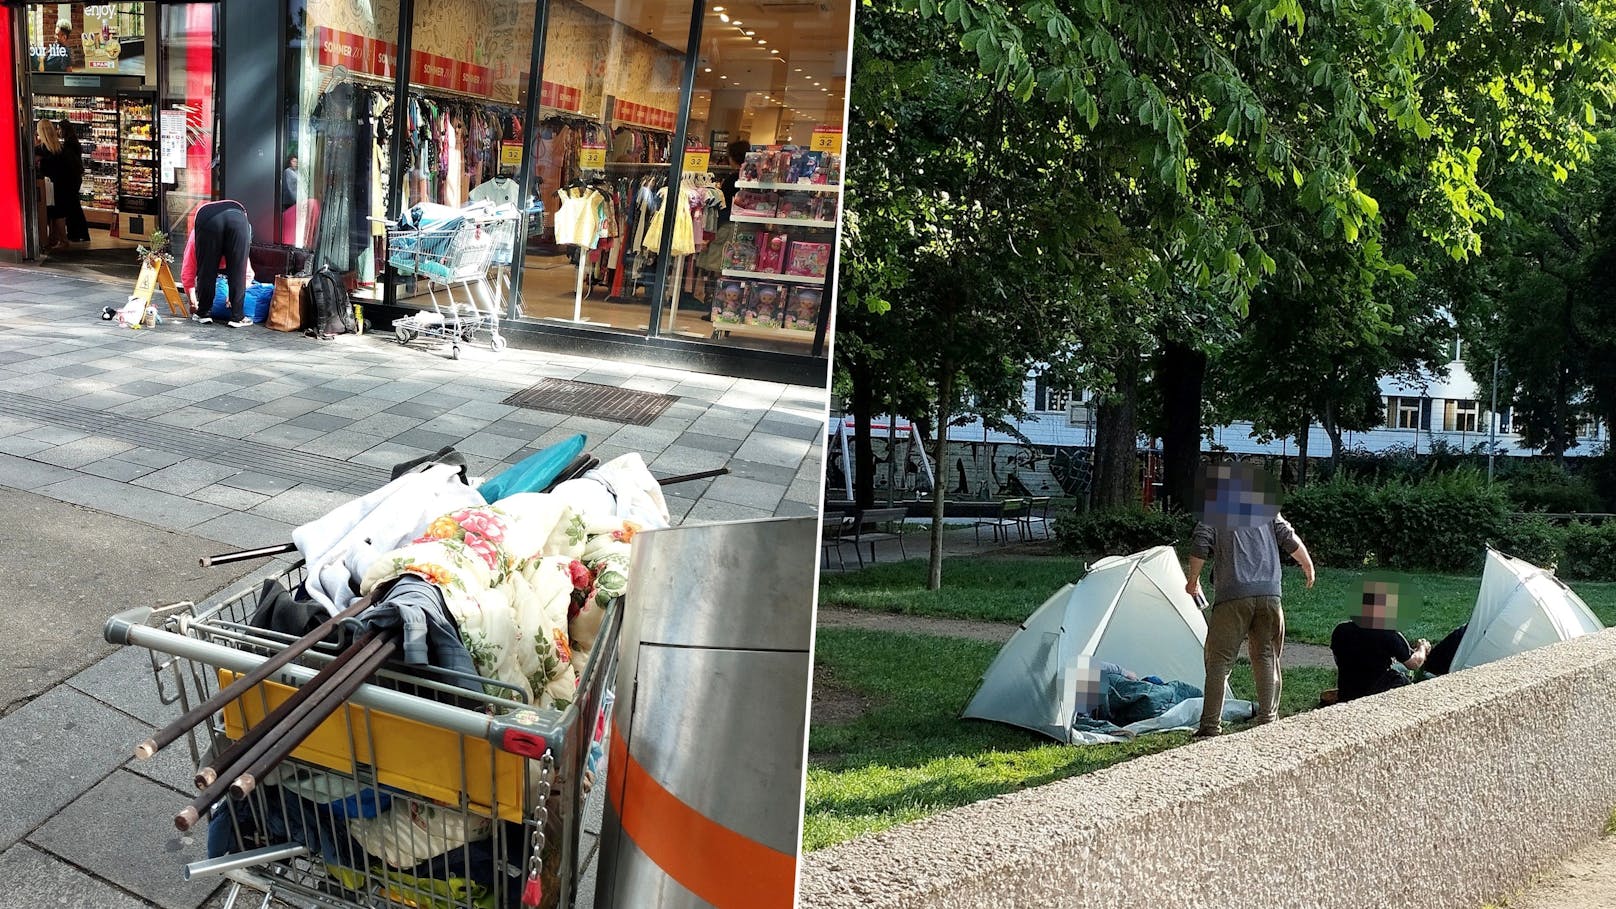 Obdachlosen-Camps – jetzt schon Zelte bei Wiener Mahü